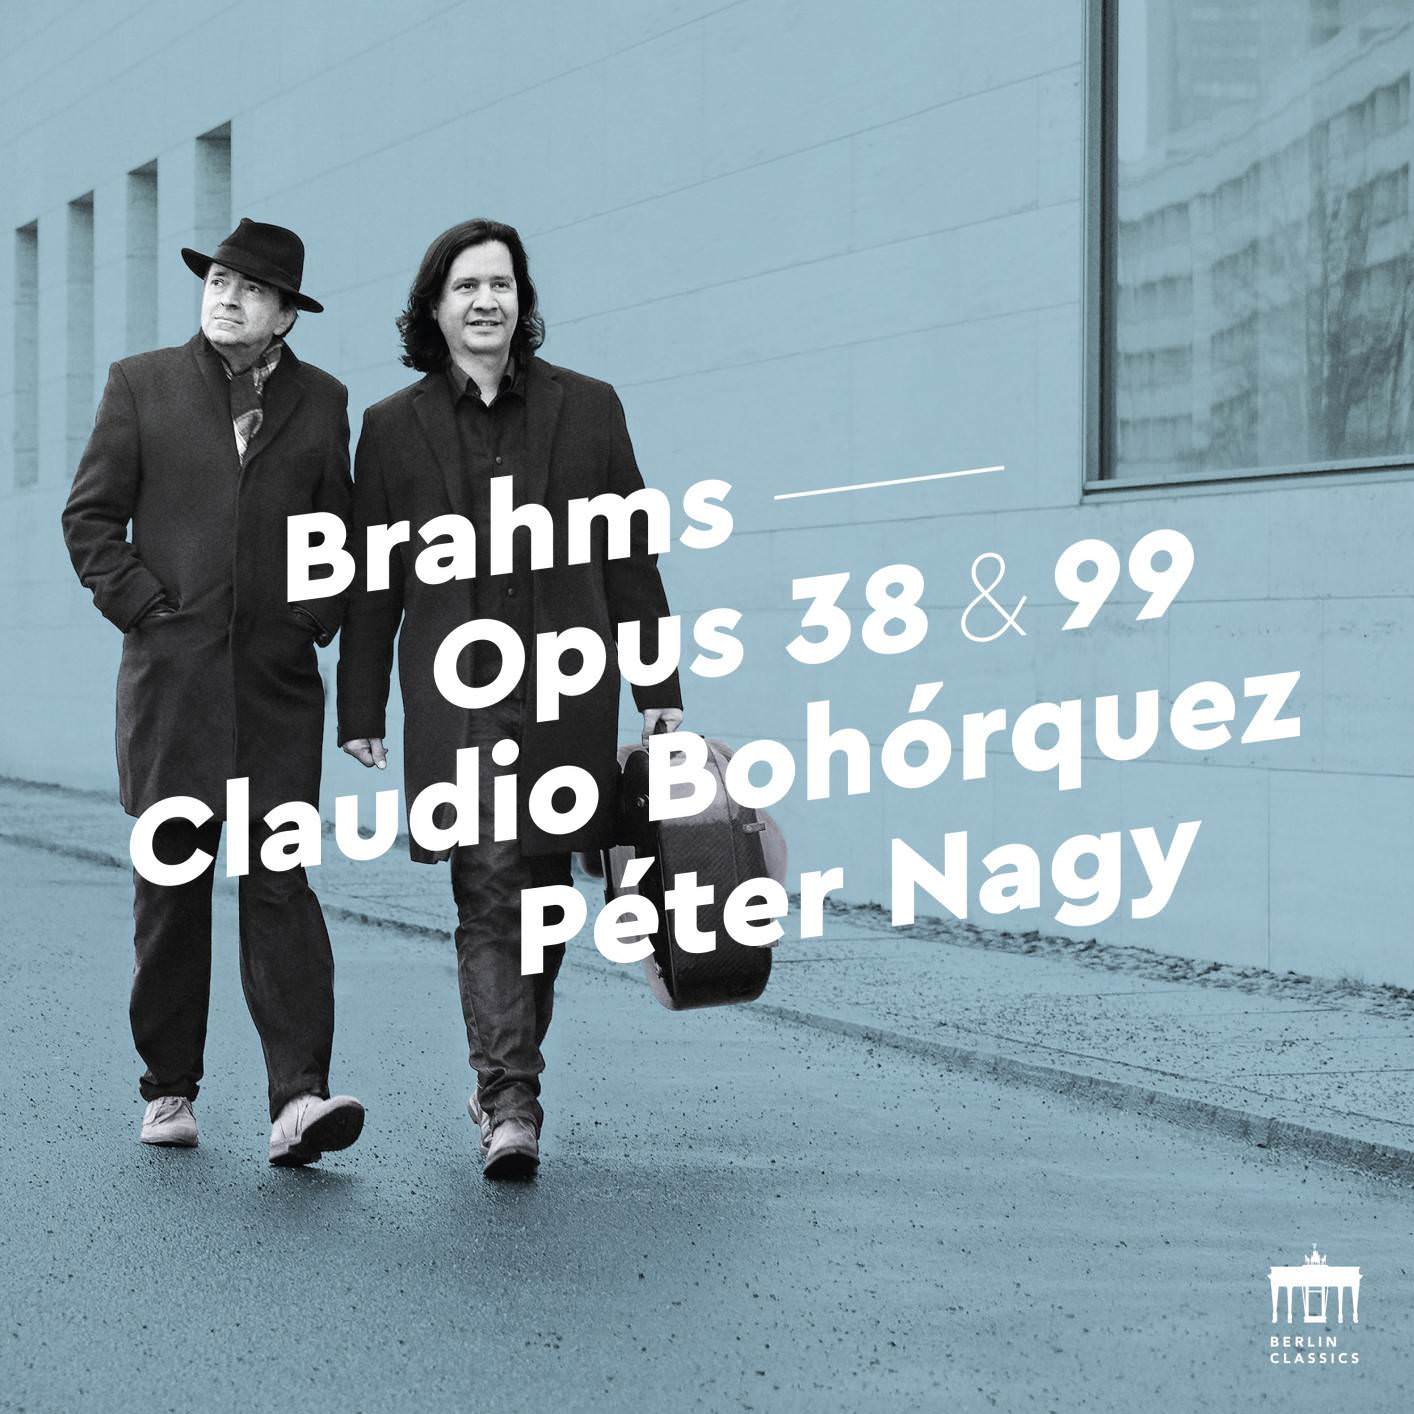 Claudio Bohorquez & Peter Nagy – Brahms: Opus 38 & 99 (Sonatas for Piano and Cello) (2018) [FLAC 24bit/96kHz]